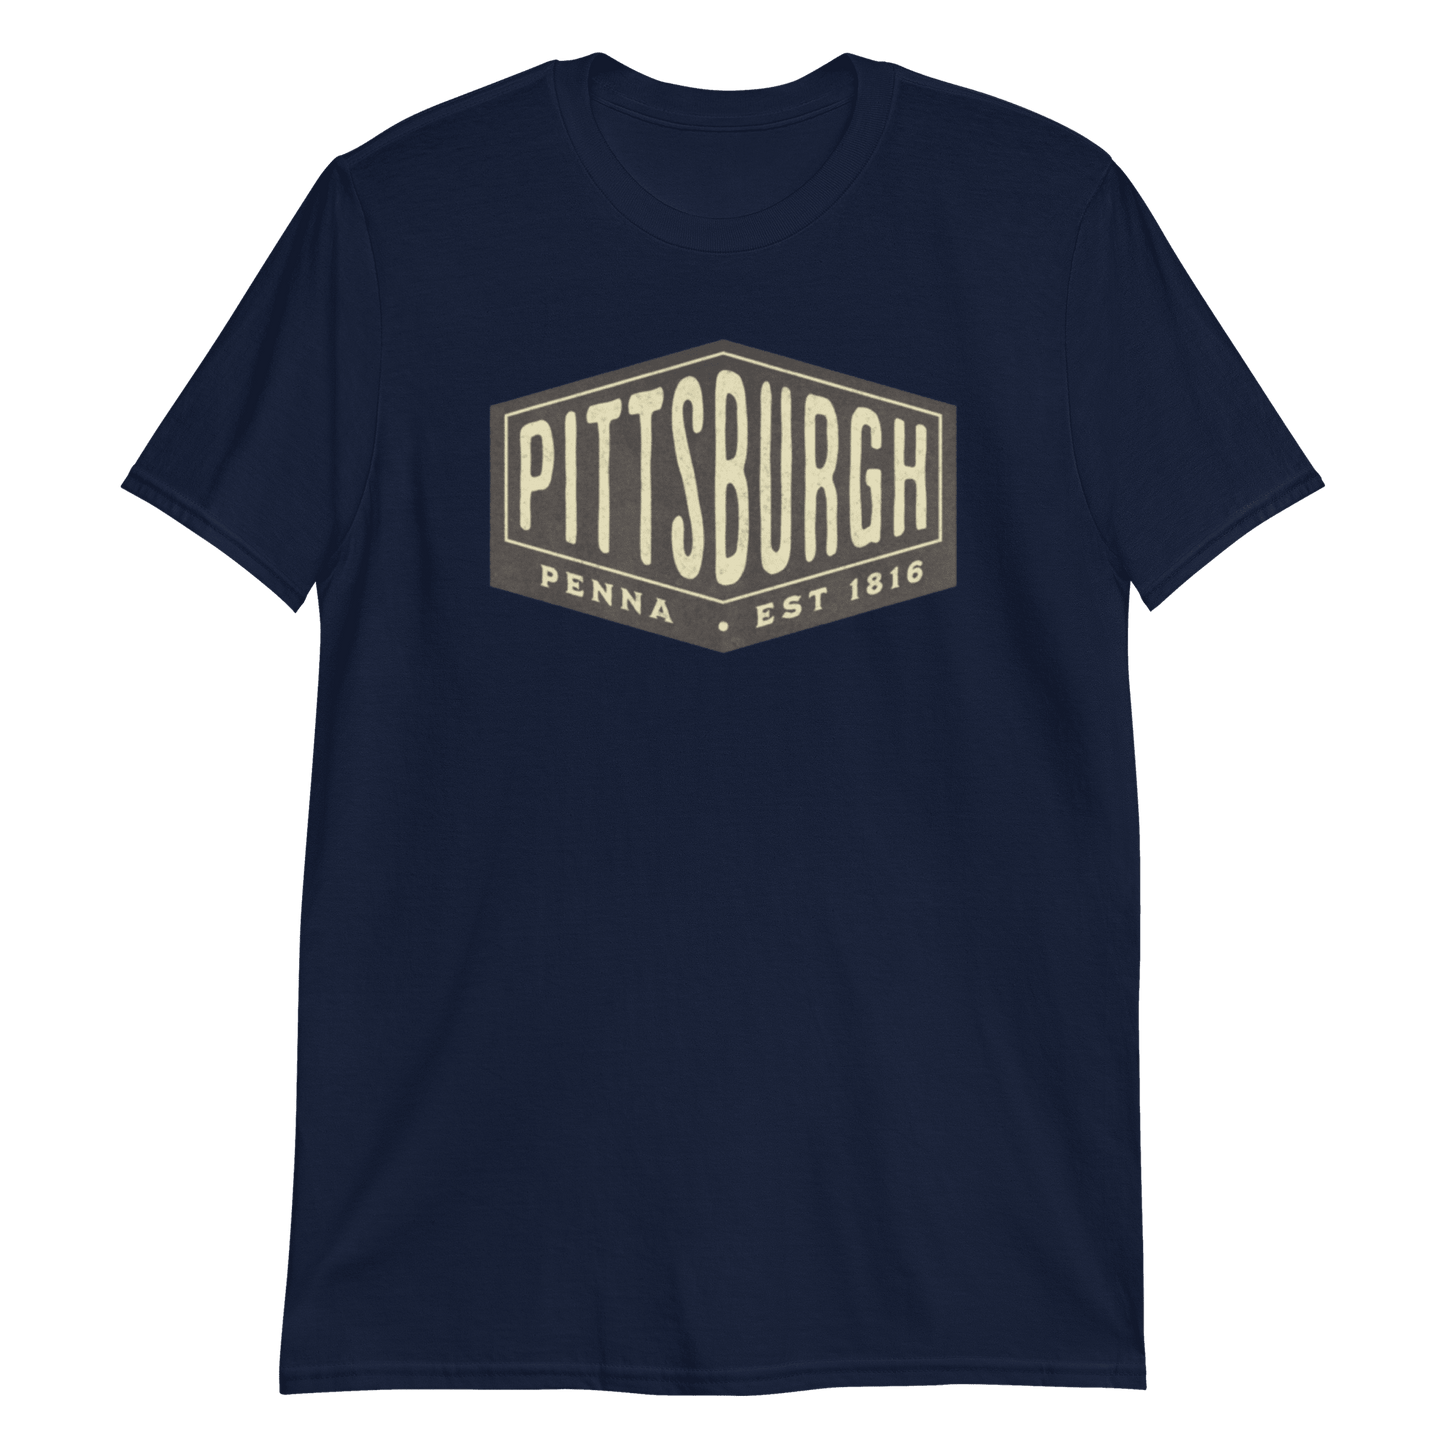 Pittsburgh Penna Est 1816 Vintage Graphic T-Shirt, Steel City Tee, Yinzer Shirt Yinzergear Navy S 